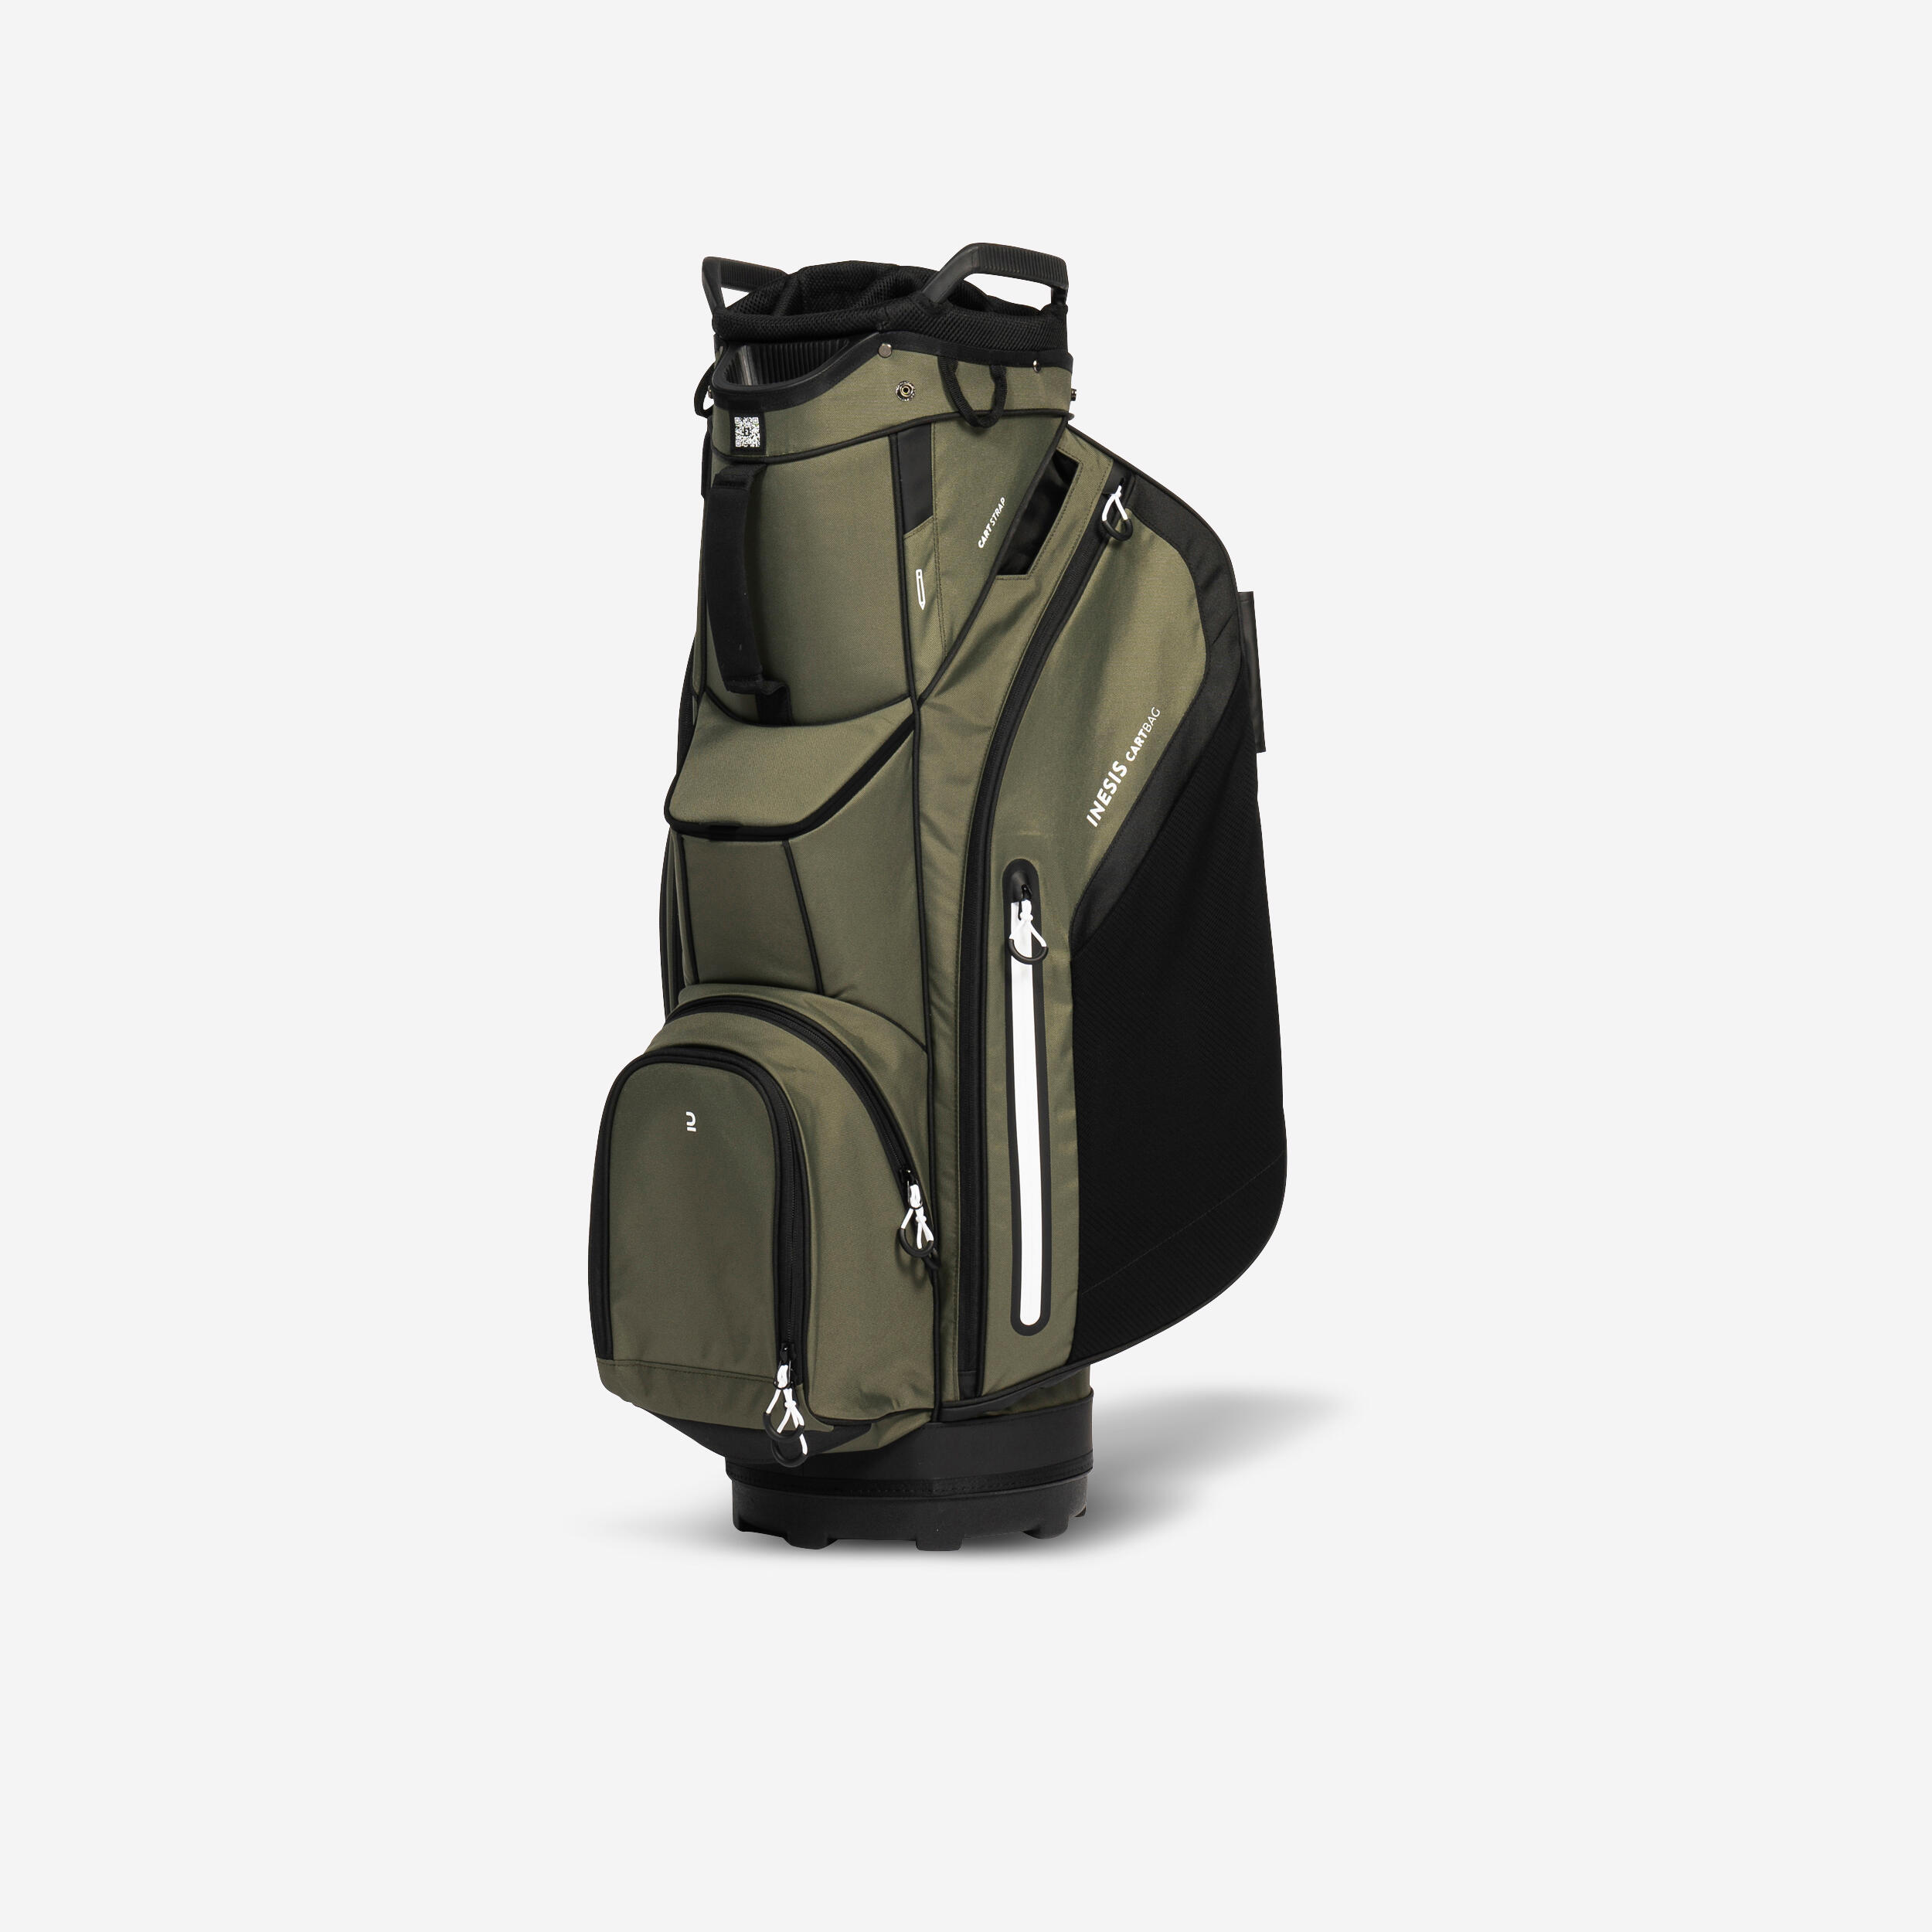 INESIS Golf trolley bag - INESIS khaki cart